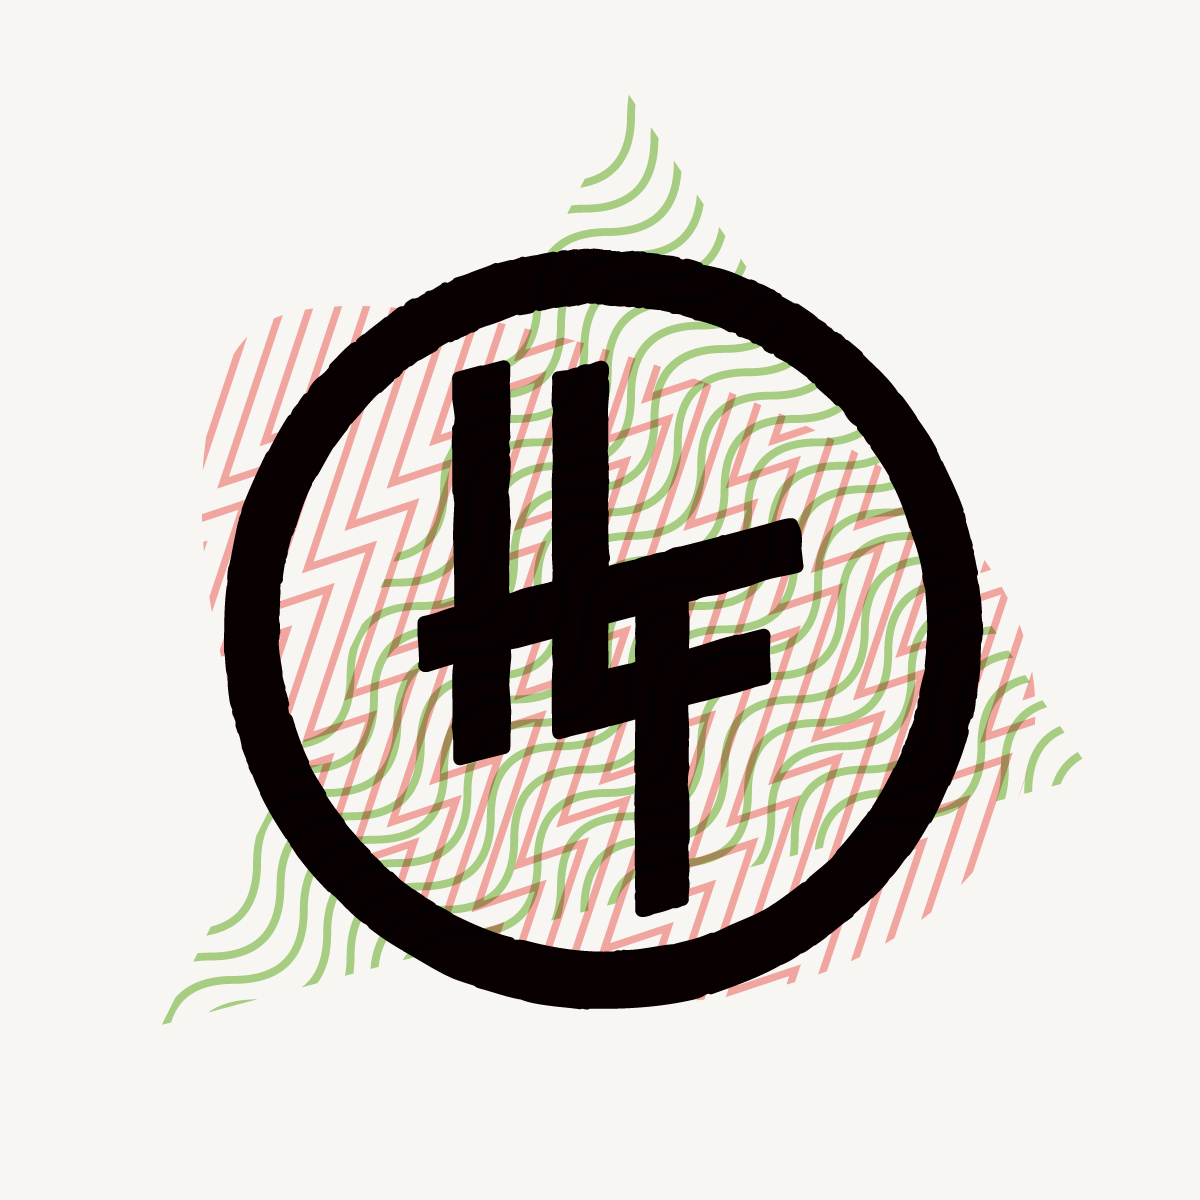 Hageland-Festival-Aarschot-2016-logo-design-1